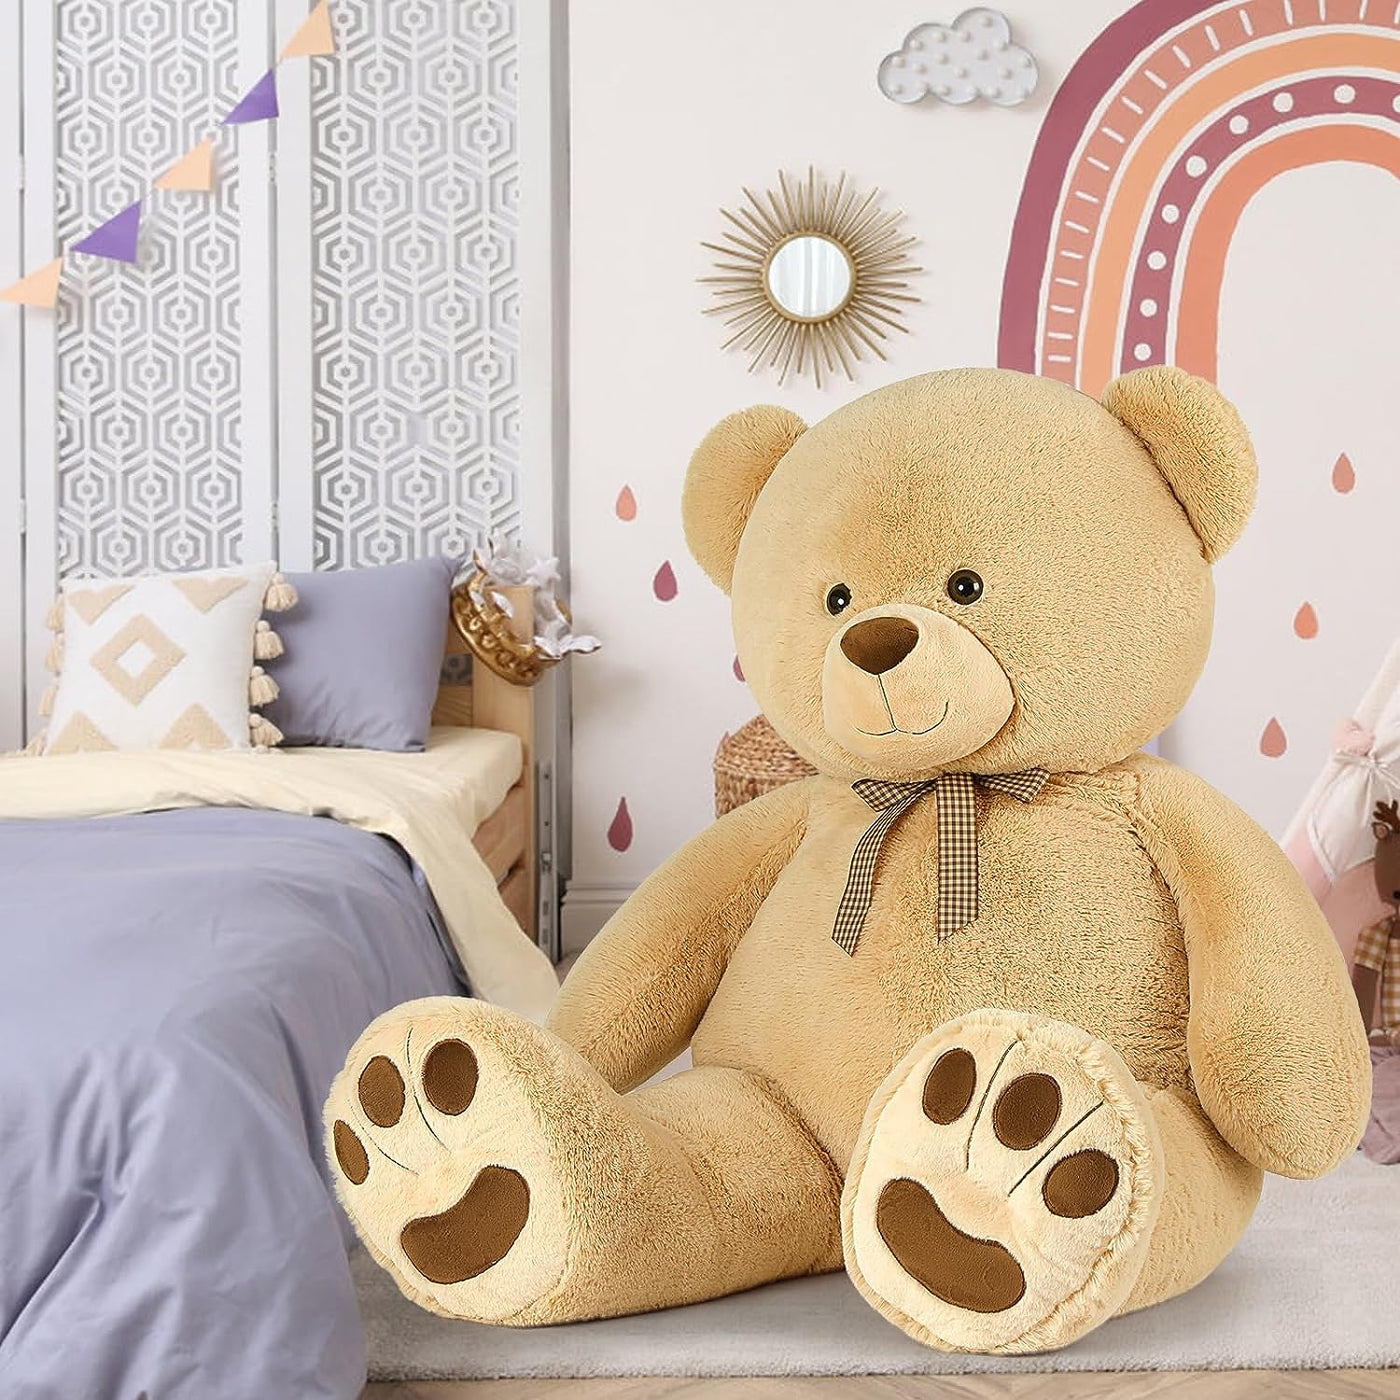 Giant Teddy Bear Plush Toy 55in/ 4.6 Feet Large Stuffed Animal Big Bear